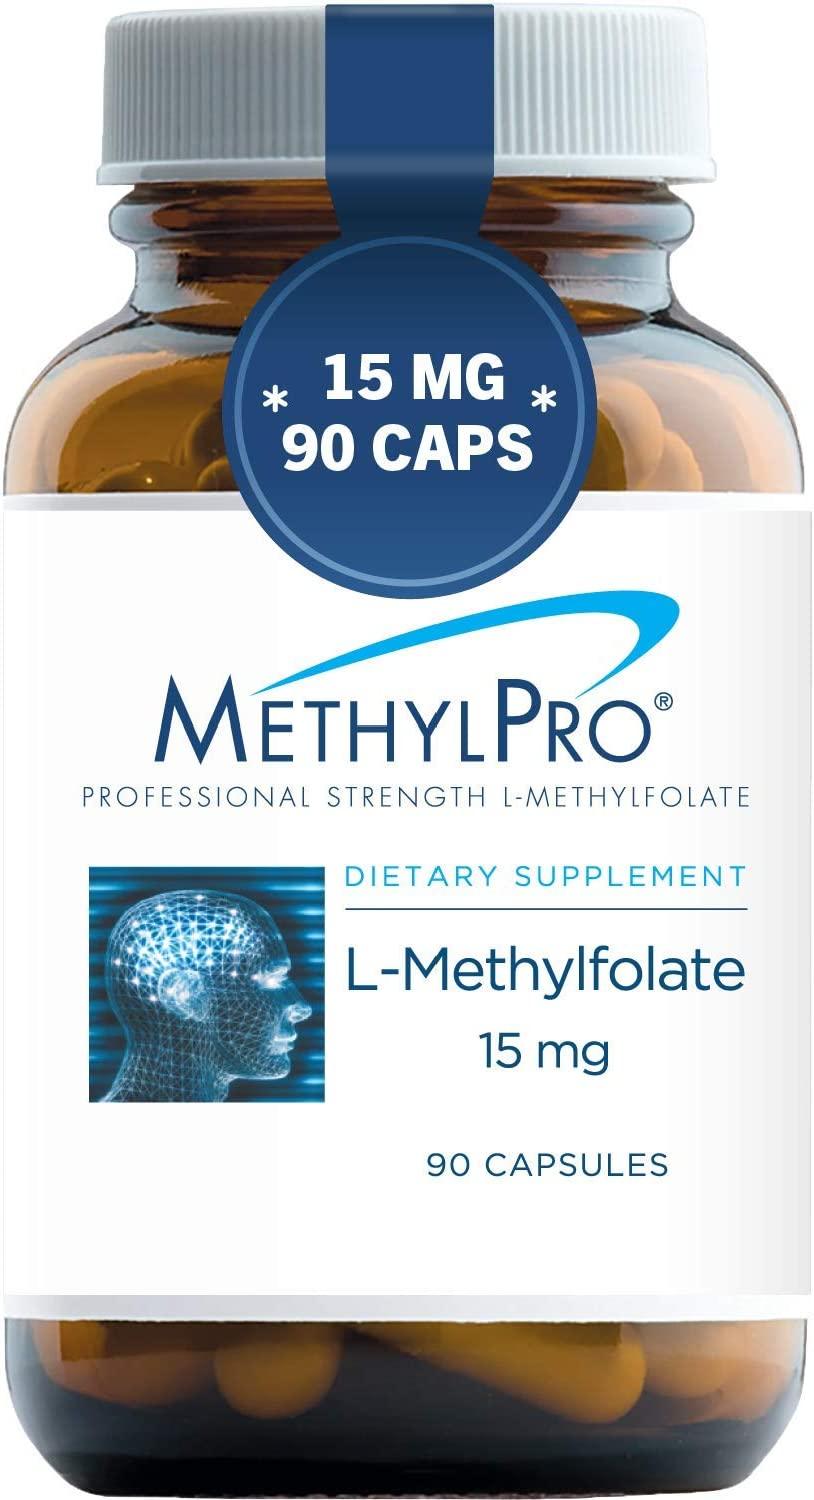 MethylPro 15mg L-Methylfolate - mondialpharma.com